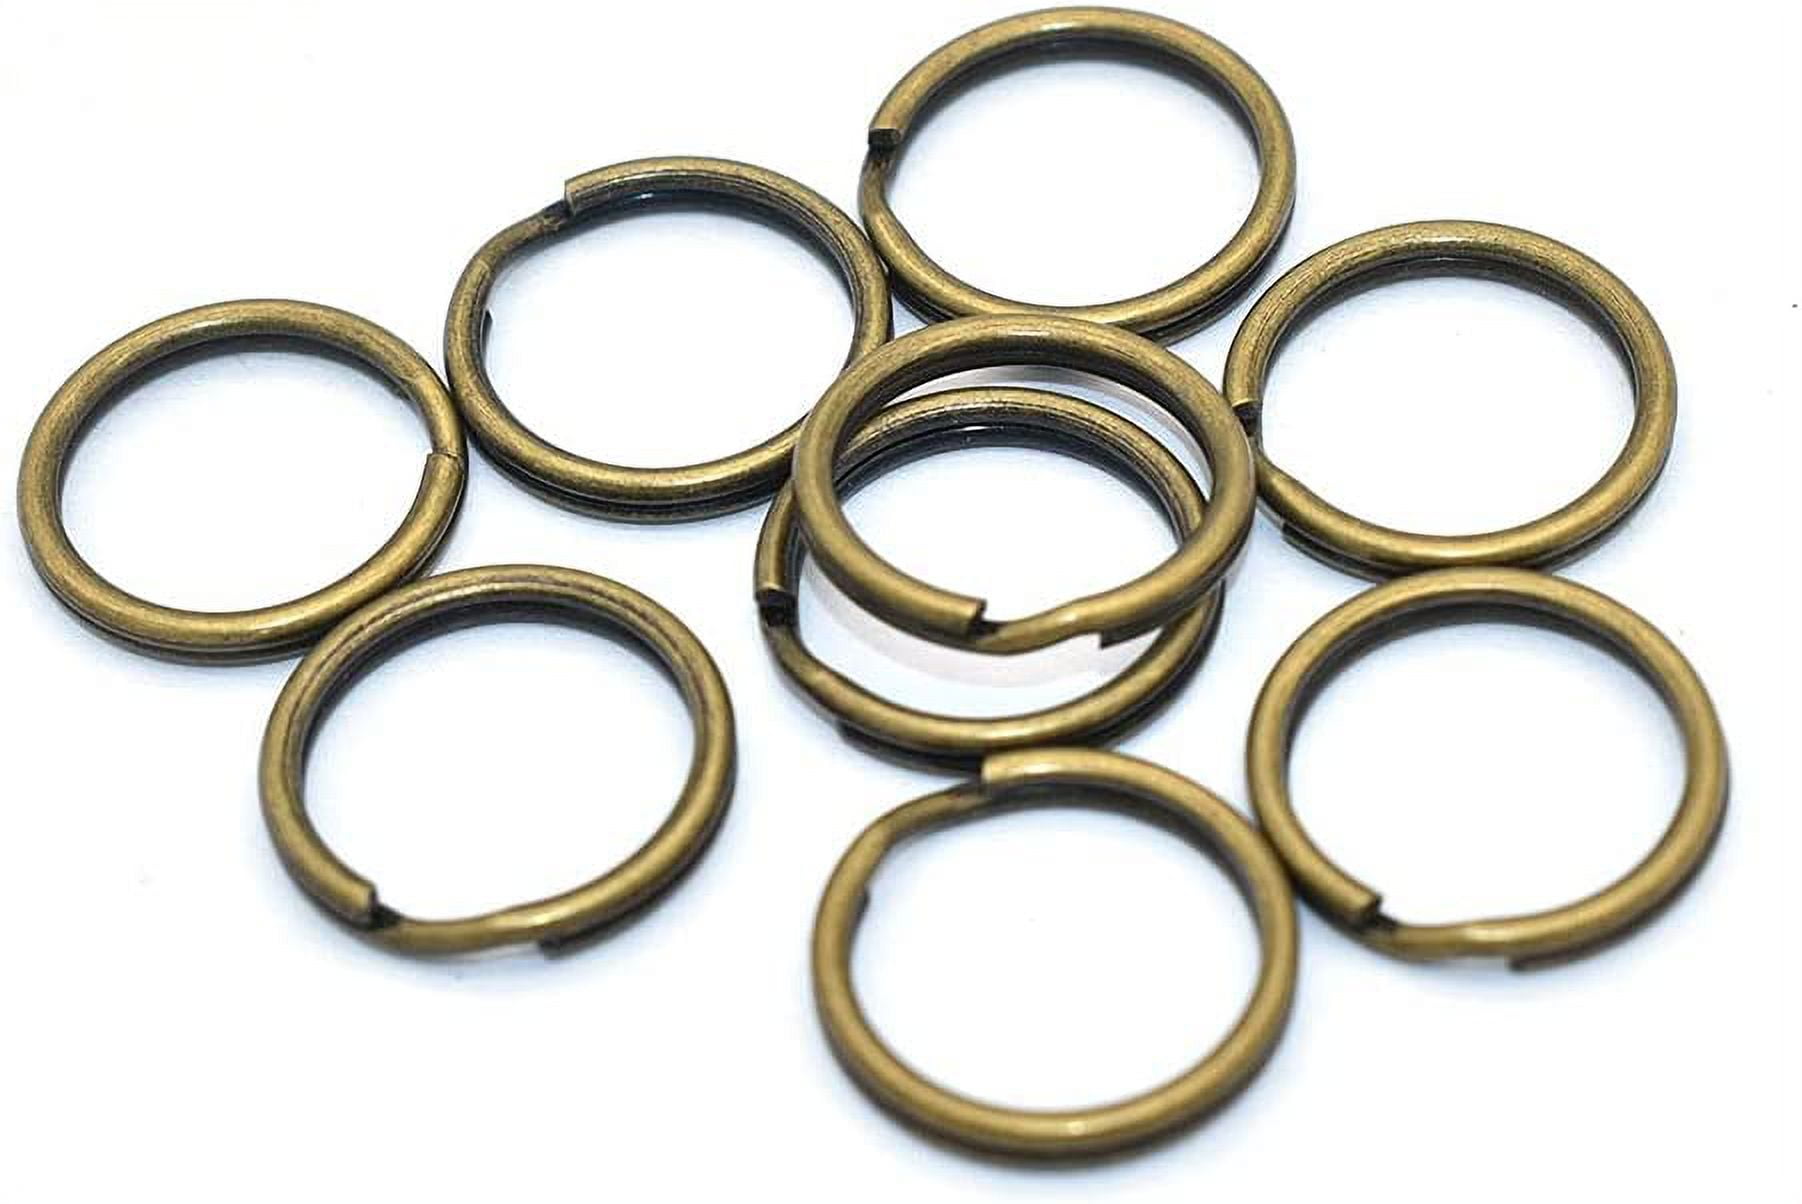 Realeather Crafts Zinc Metal Rings-3 6/Pkg